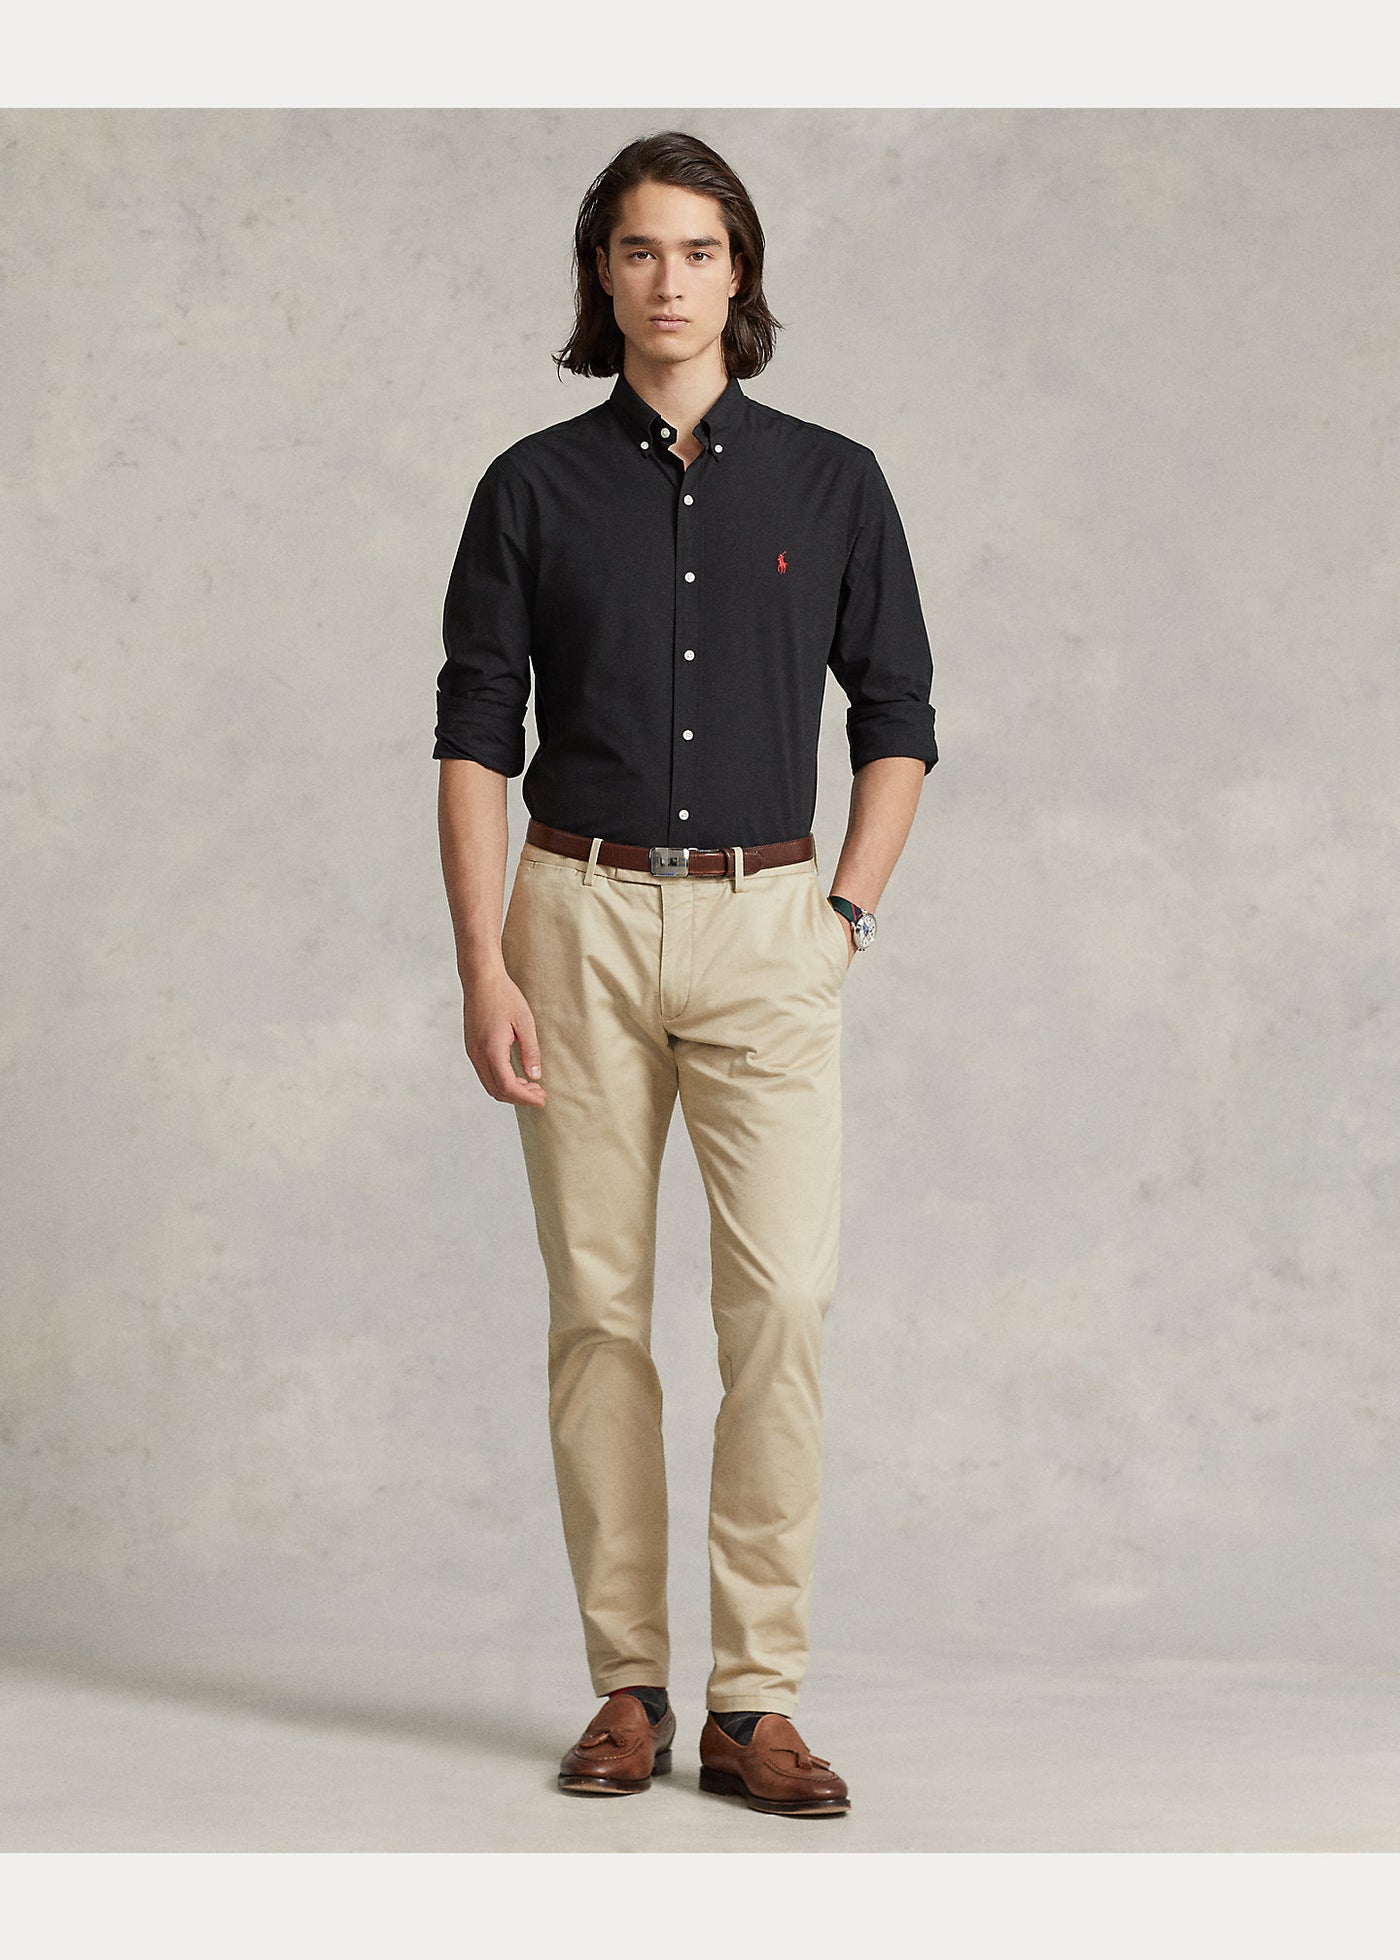 Ralph Lauren Custom Fit Stretch Poplin Shirt | Black